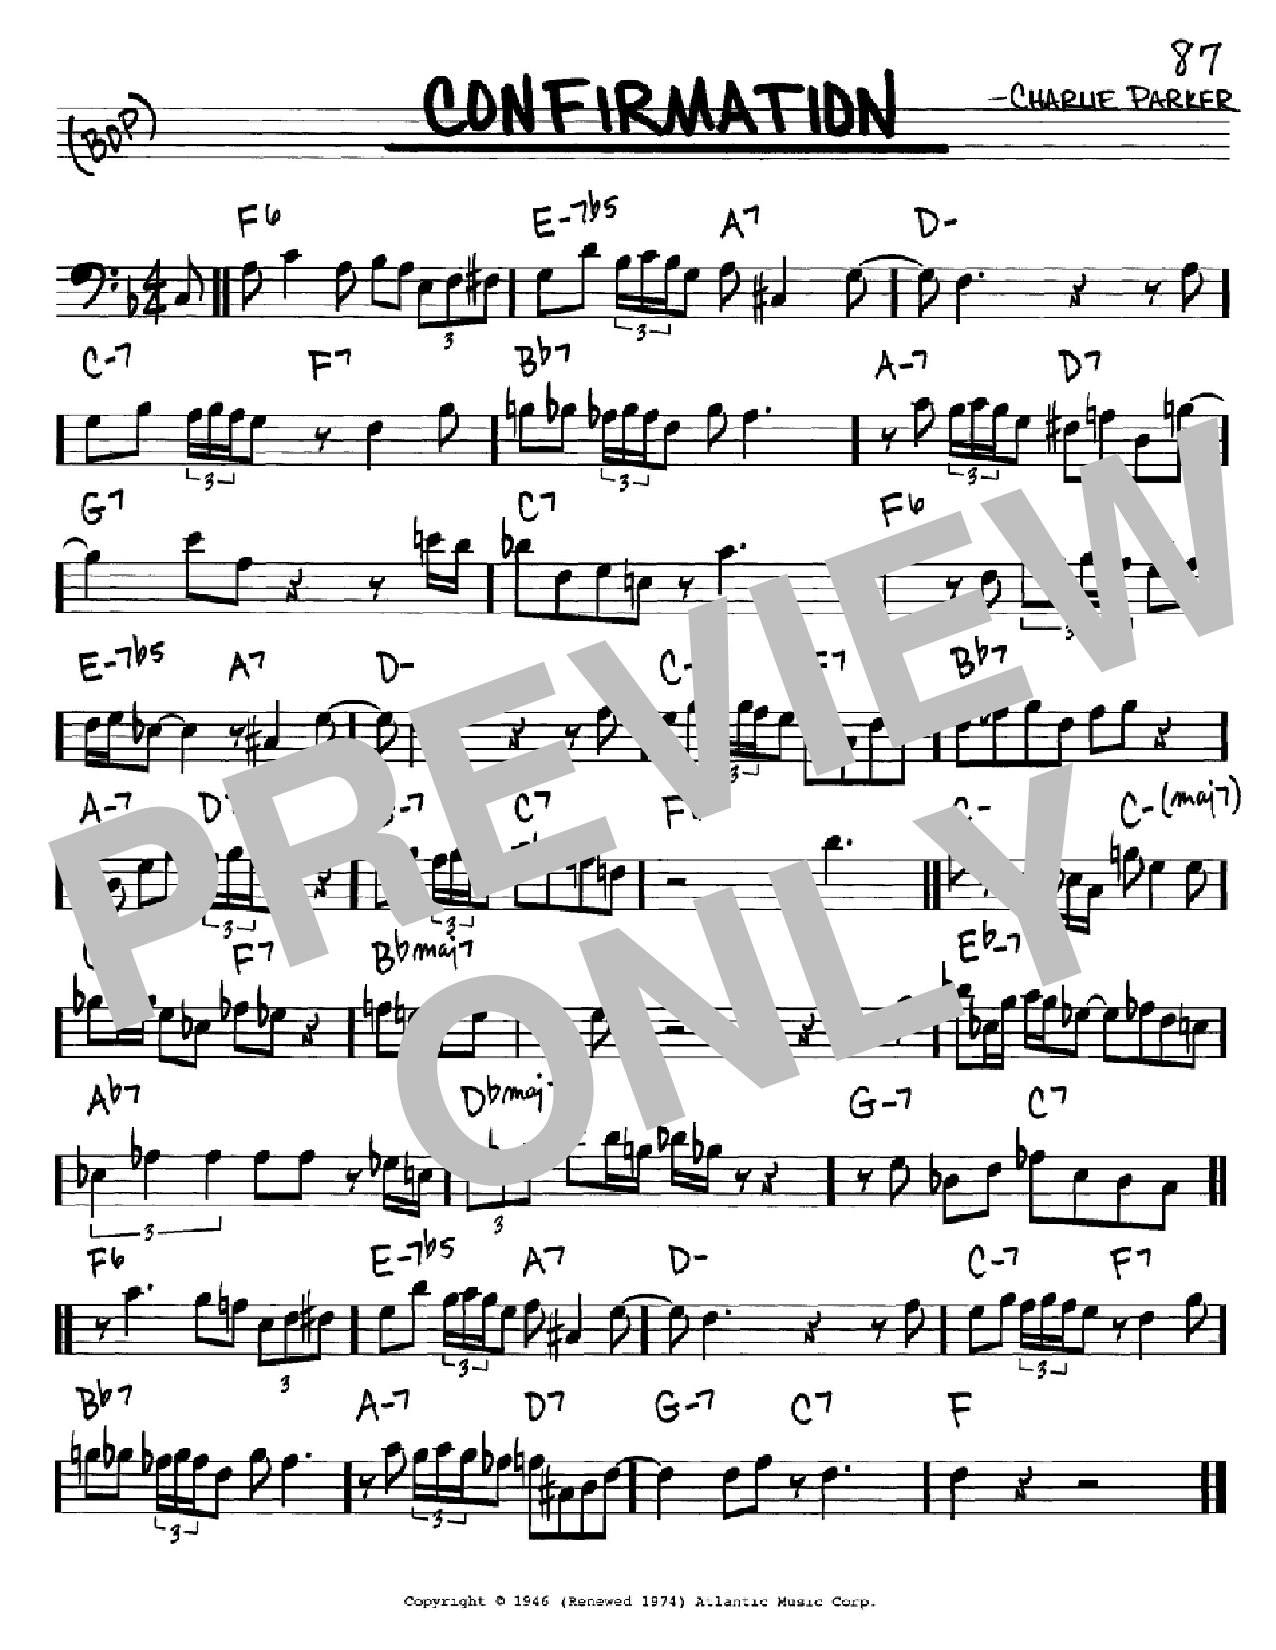 Charlie Parker Confirmation Sheet Music Notes & Chords for Alto Sax Transcription - Download or Print PDF